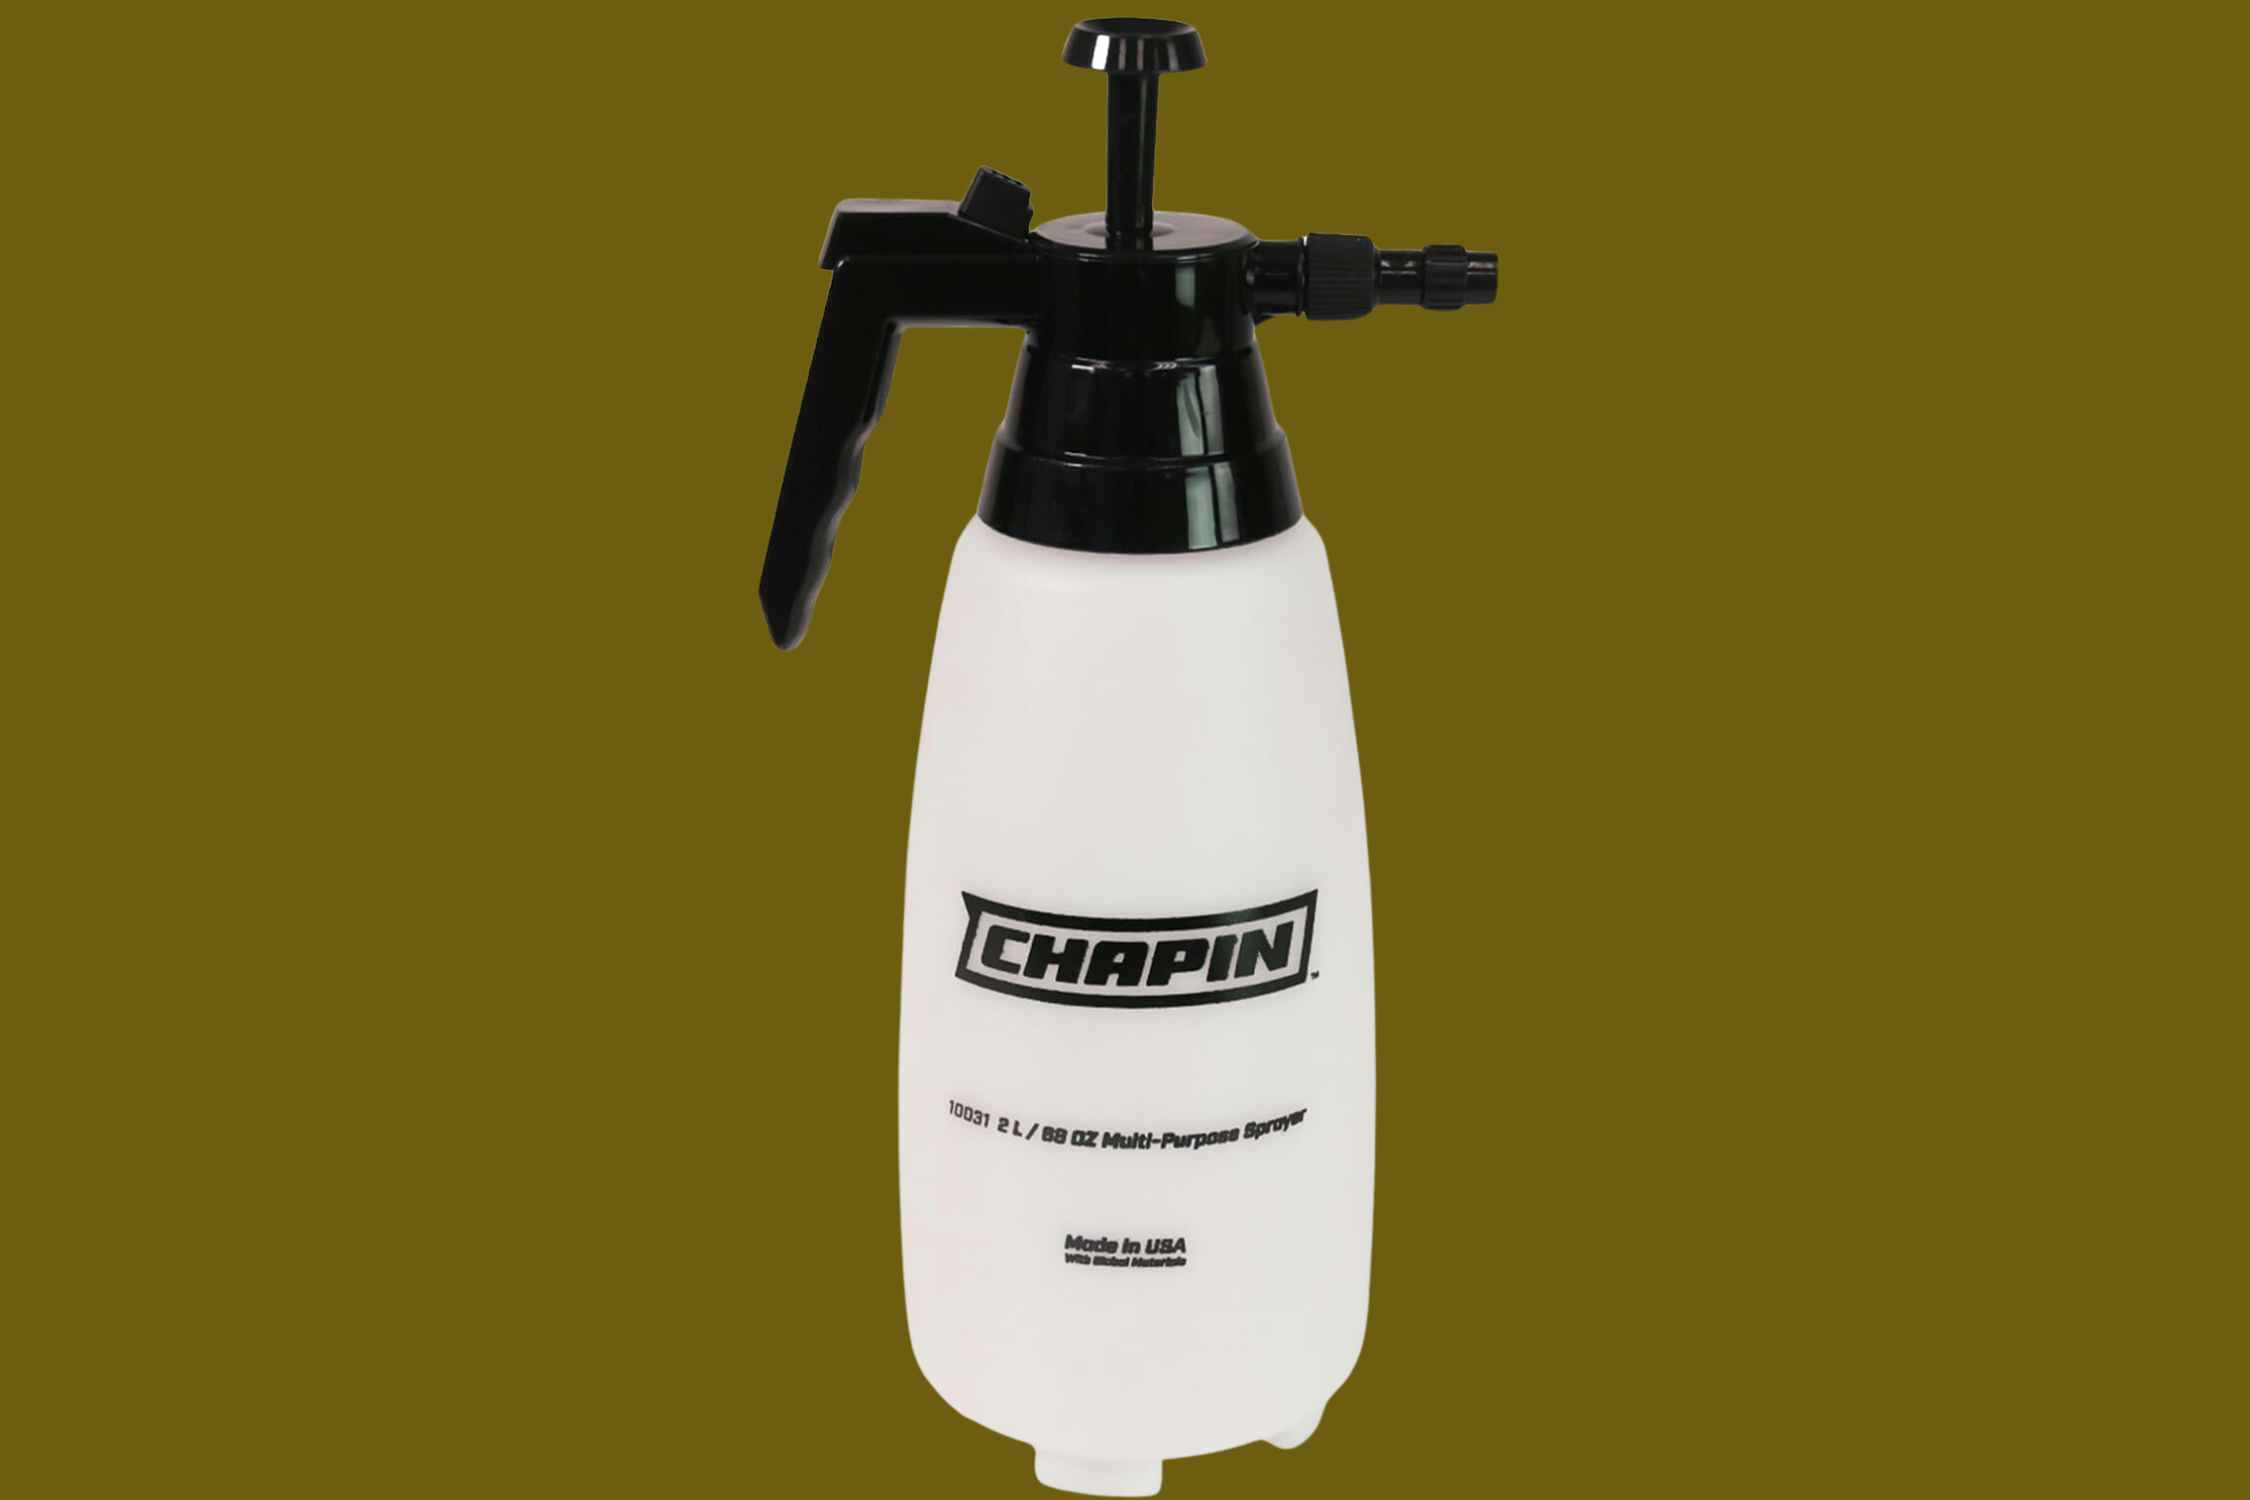 Chapin Handheld Garden Pump Sprayer, Only $7.26 on Amazon